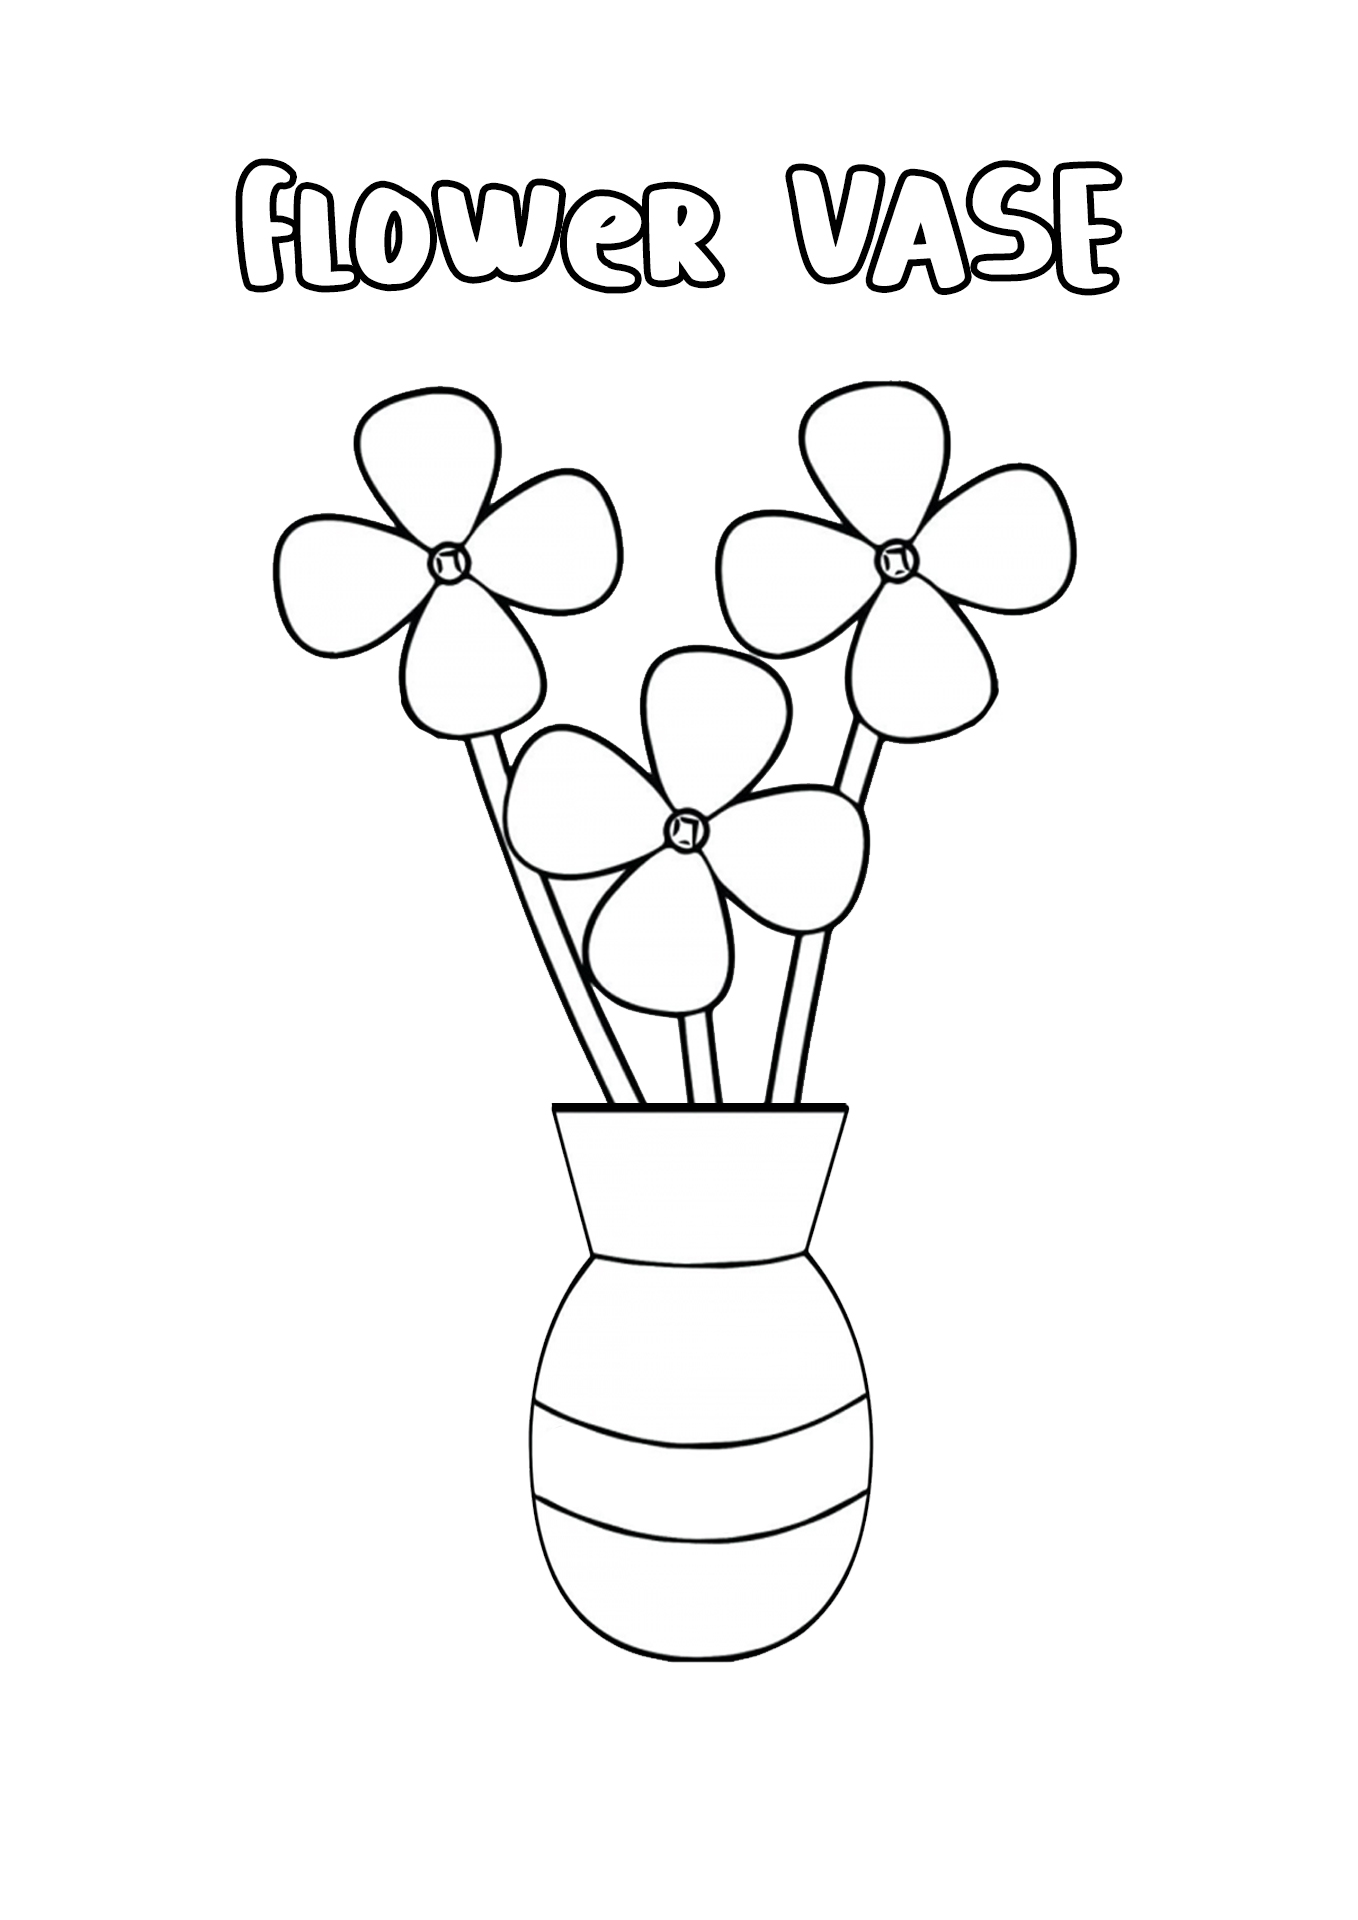 Flower Vase Coloring Page Image